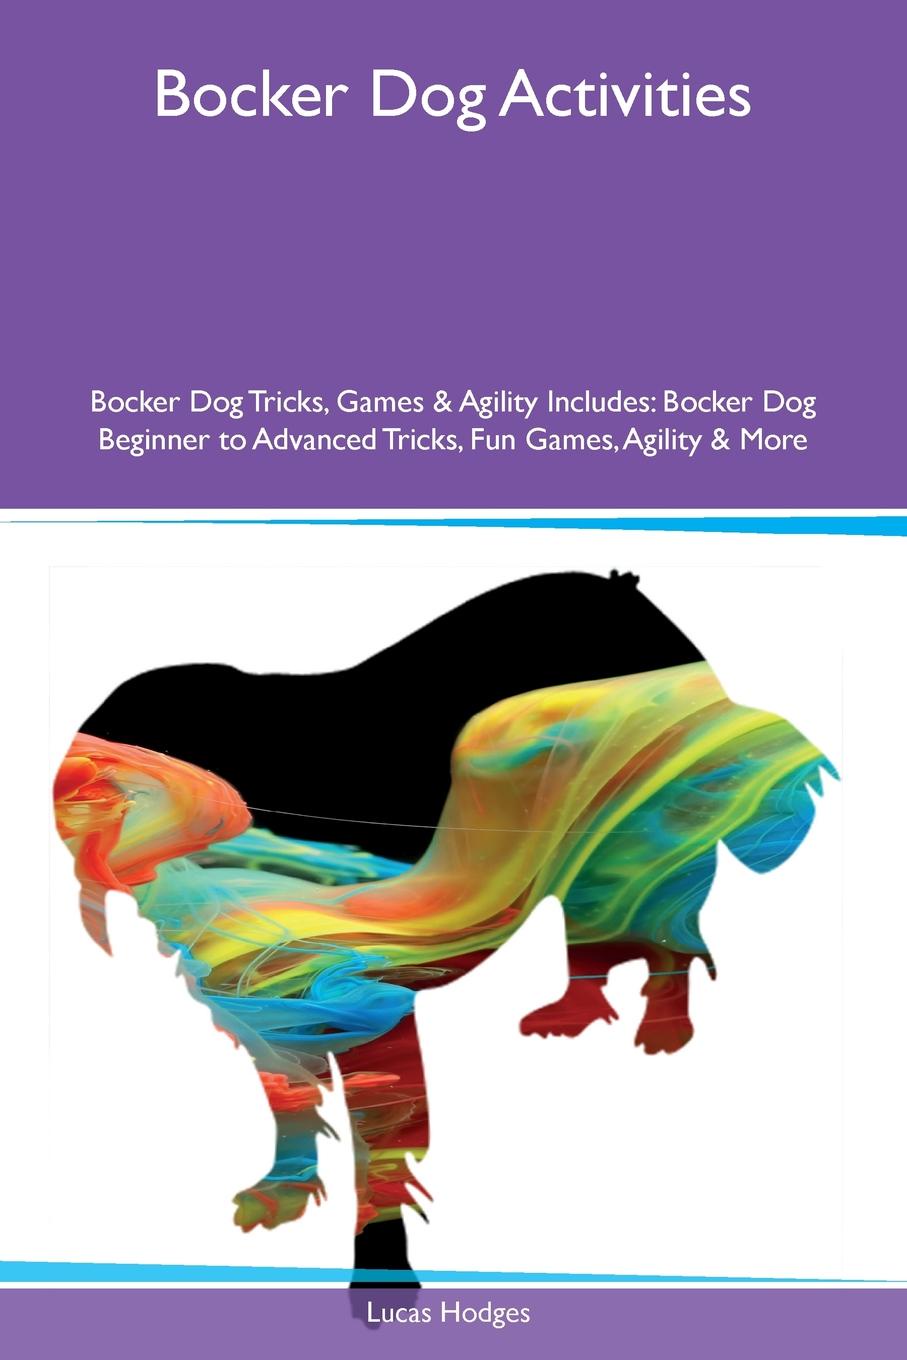 Bocker Dog Activities Bocker Dog Tricks, Games & Agility Includes. Bocker Dog Beginner to Advanced Tricks, Fun Games, Agility & More